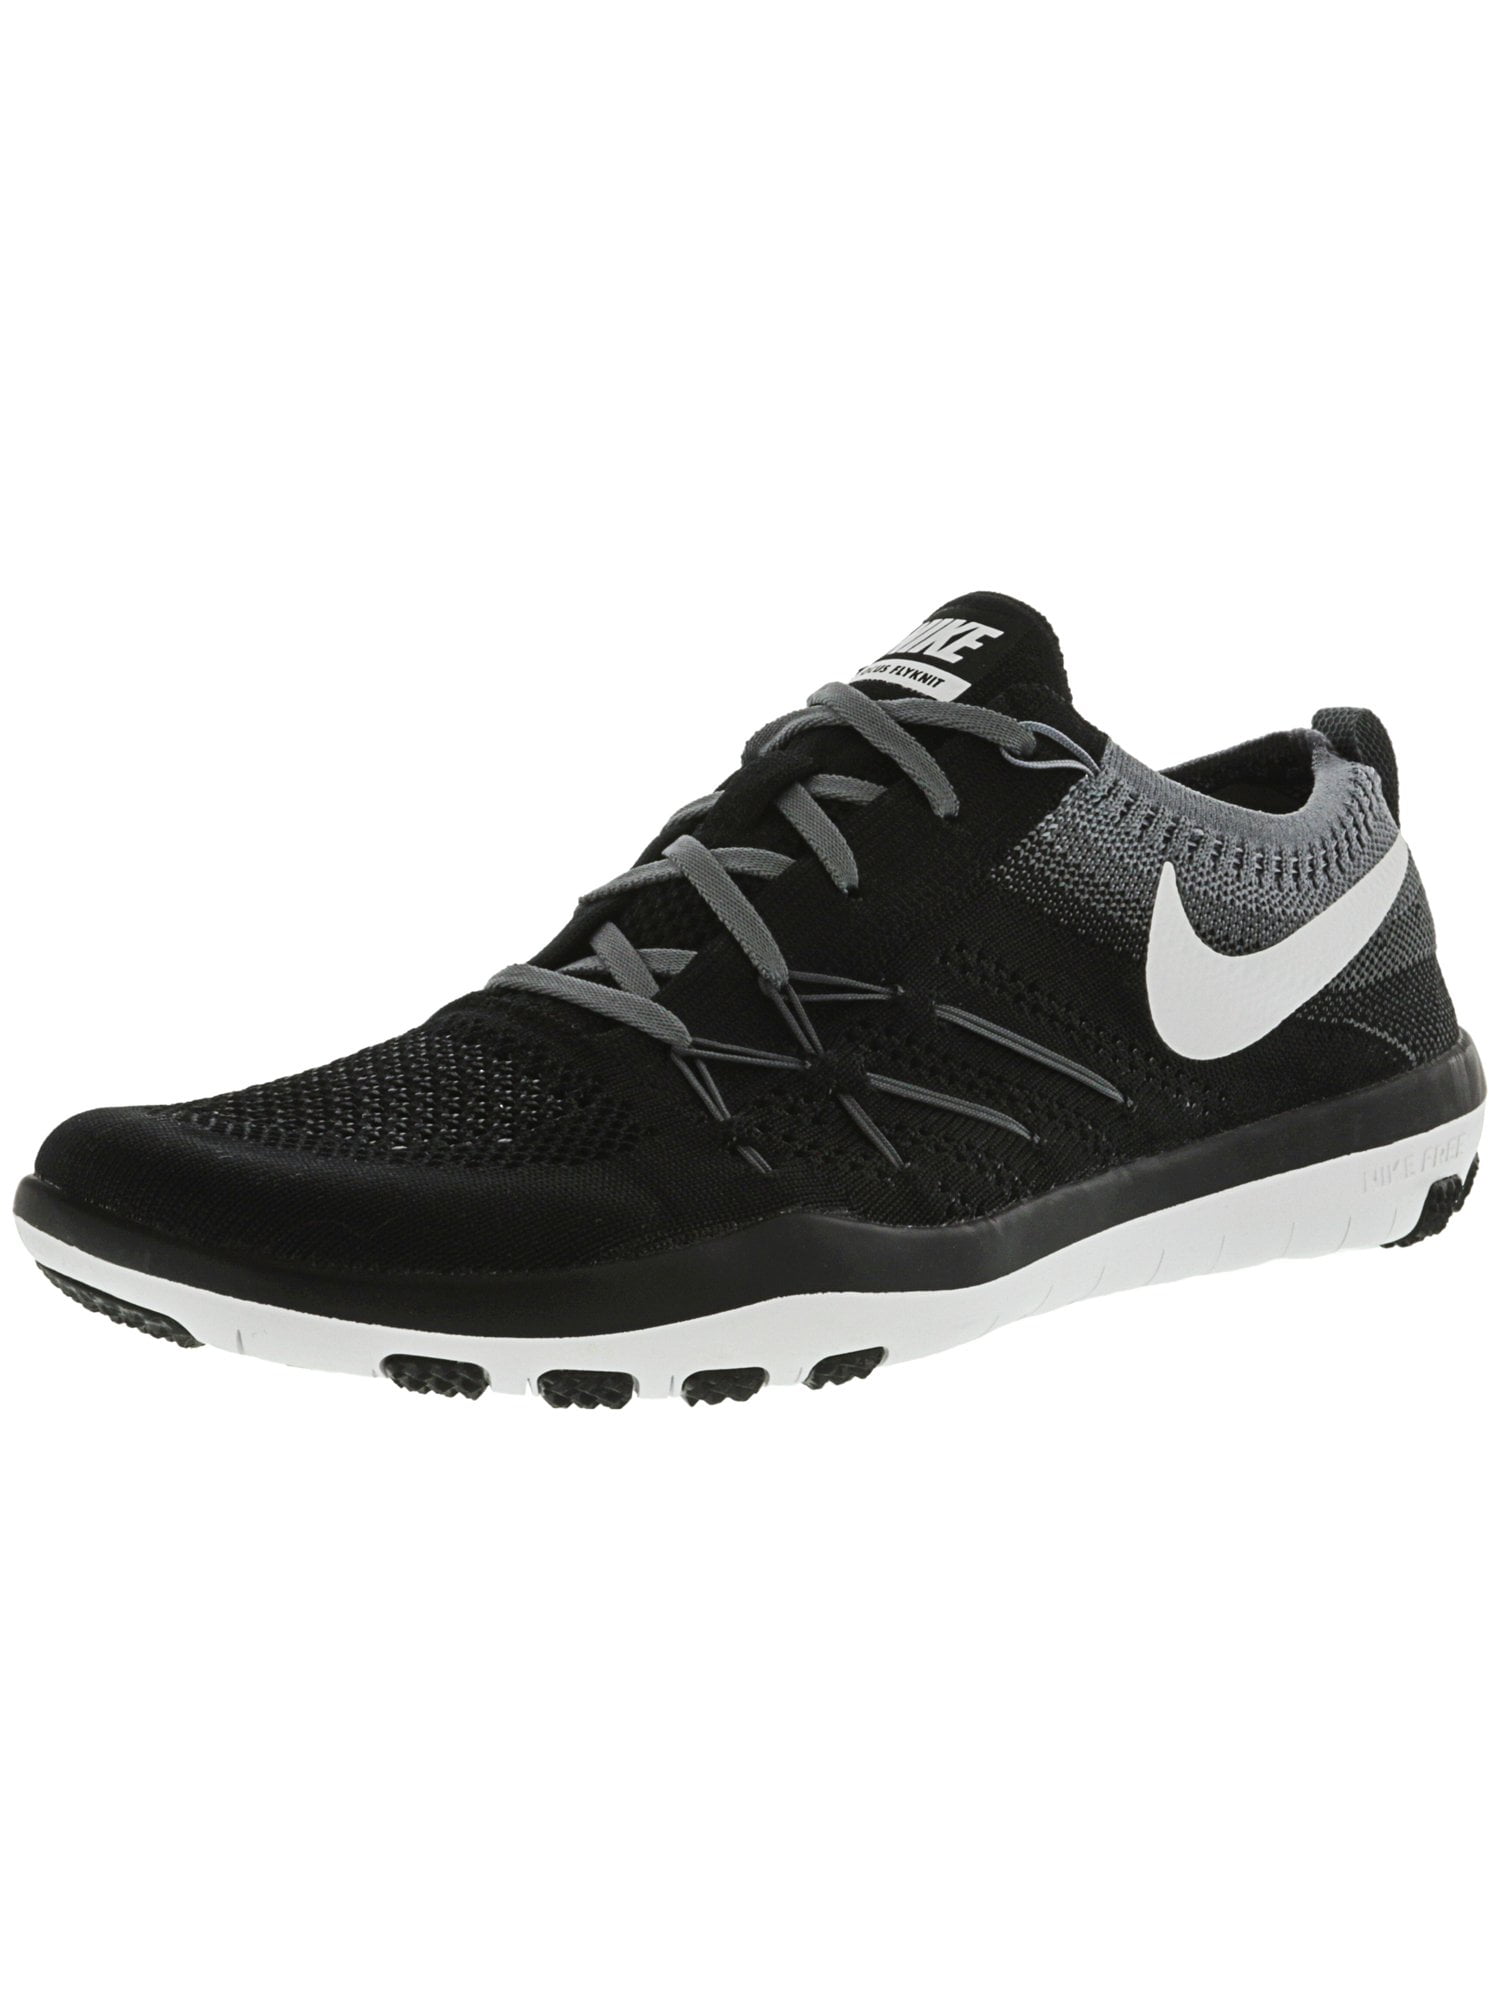 Nike Women's Free Tr Flyknit Black / White-Cool Grey Ankle-High Trainer Shoe - 8.5M Walmart.com